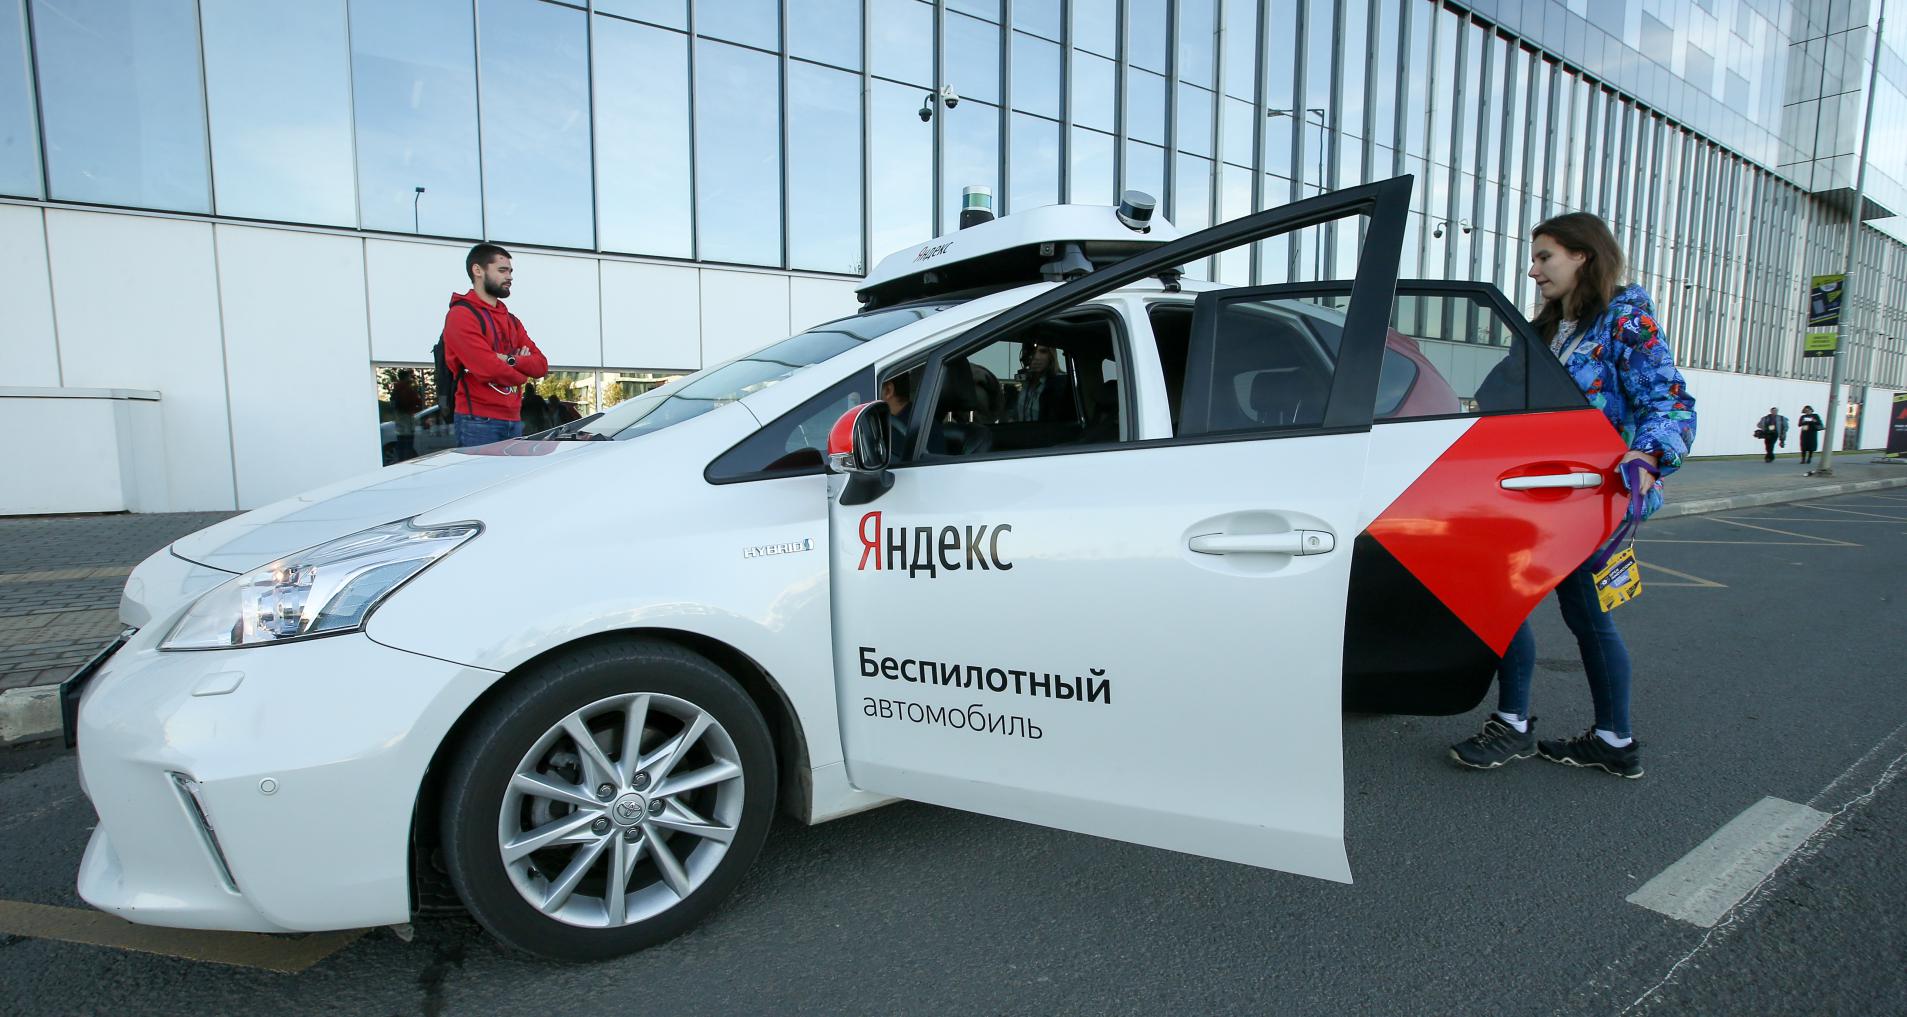 Yandex shifts focus to ya.ru as it eyes media exit in Russia